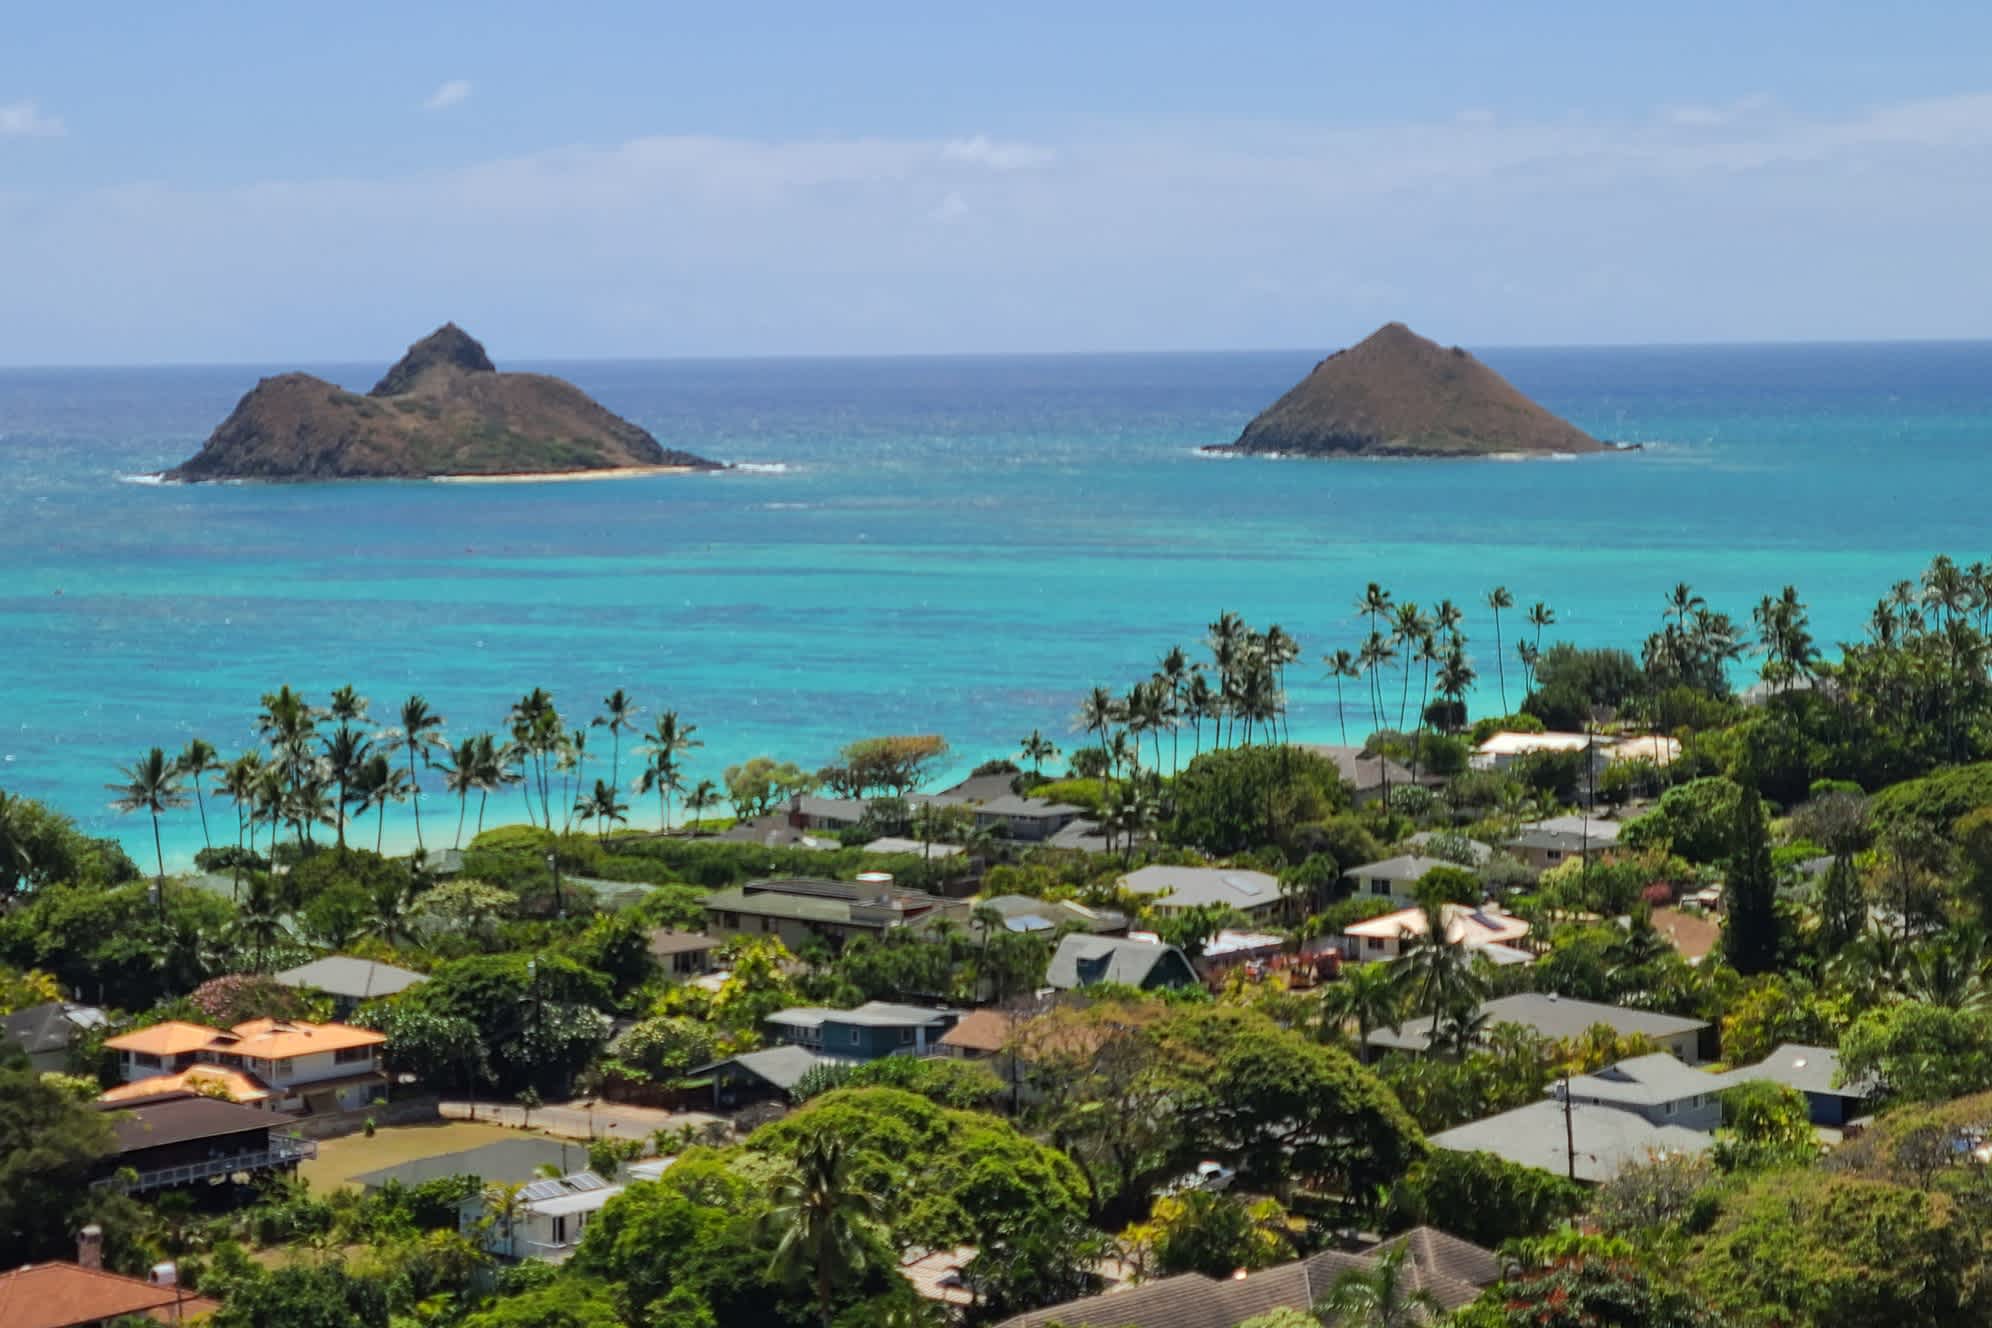 Moku Nui und Moku Iki Inseln in der Nähe von Lanikai Beach in Oahu, Hawaii